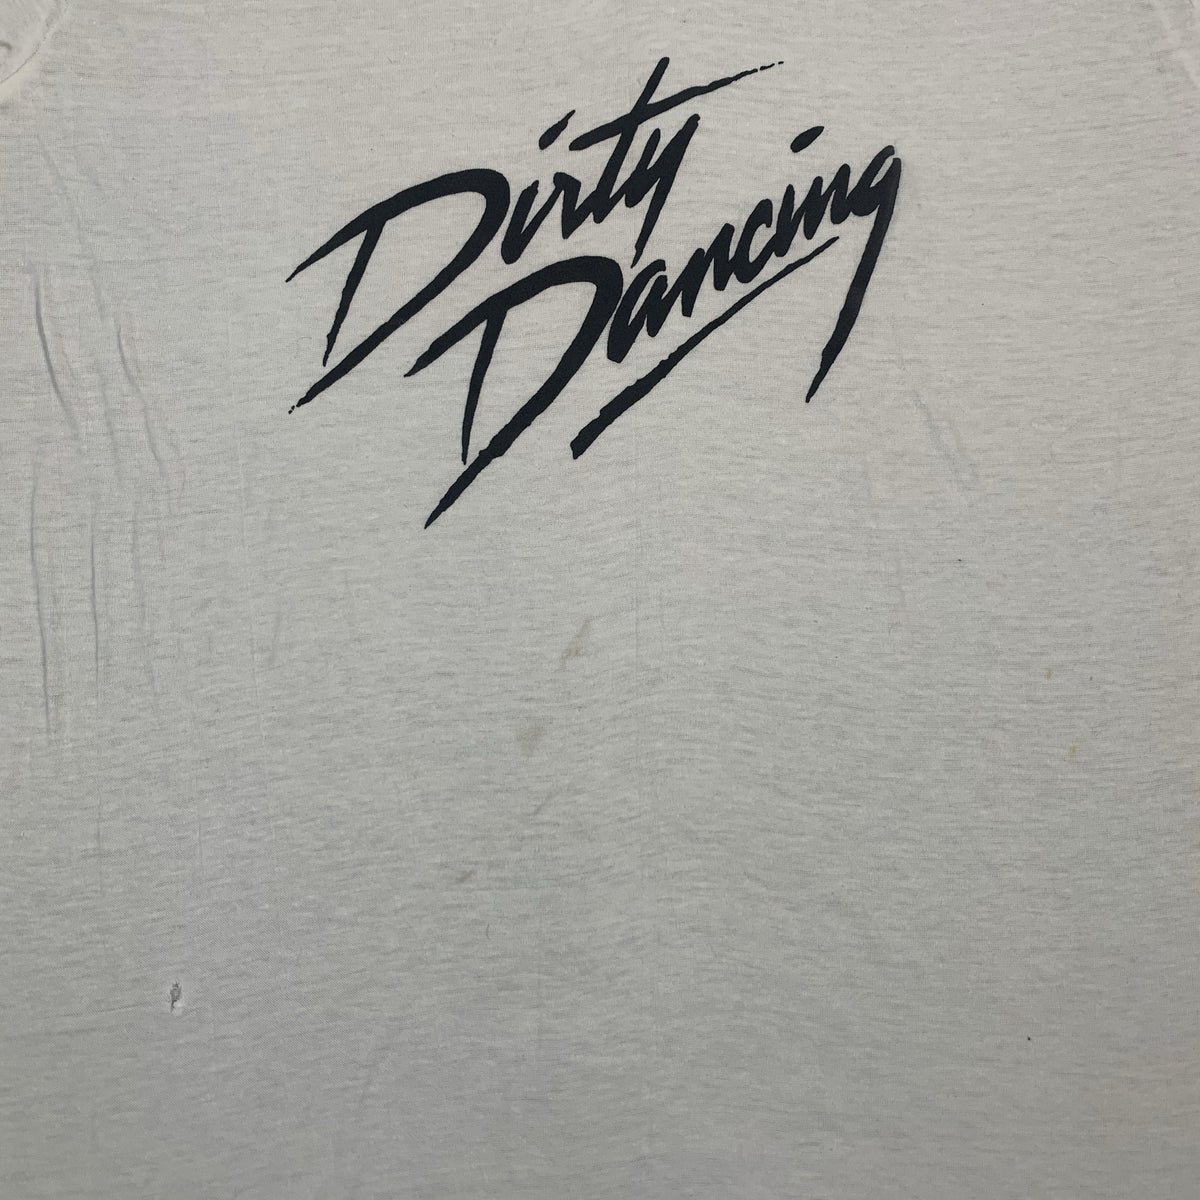 Vintage Dirty Dancing “Promo” V-Neck Shirt - jointcustodydc